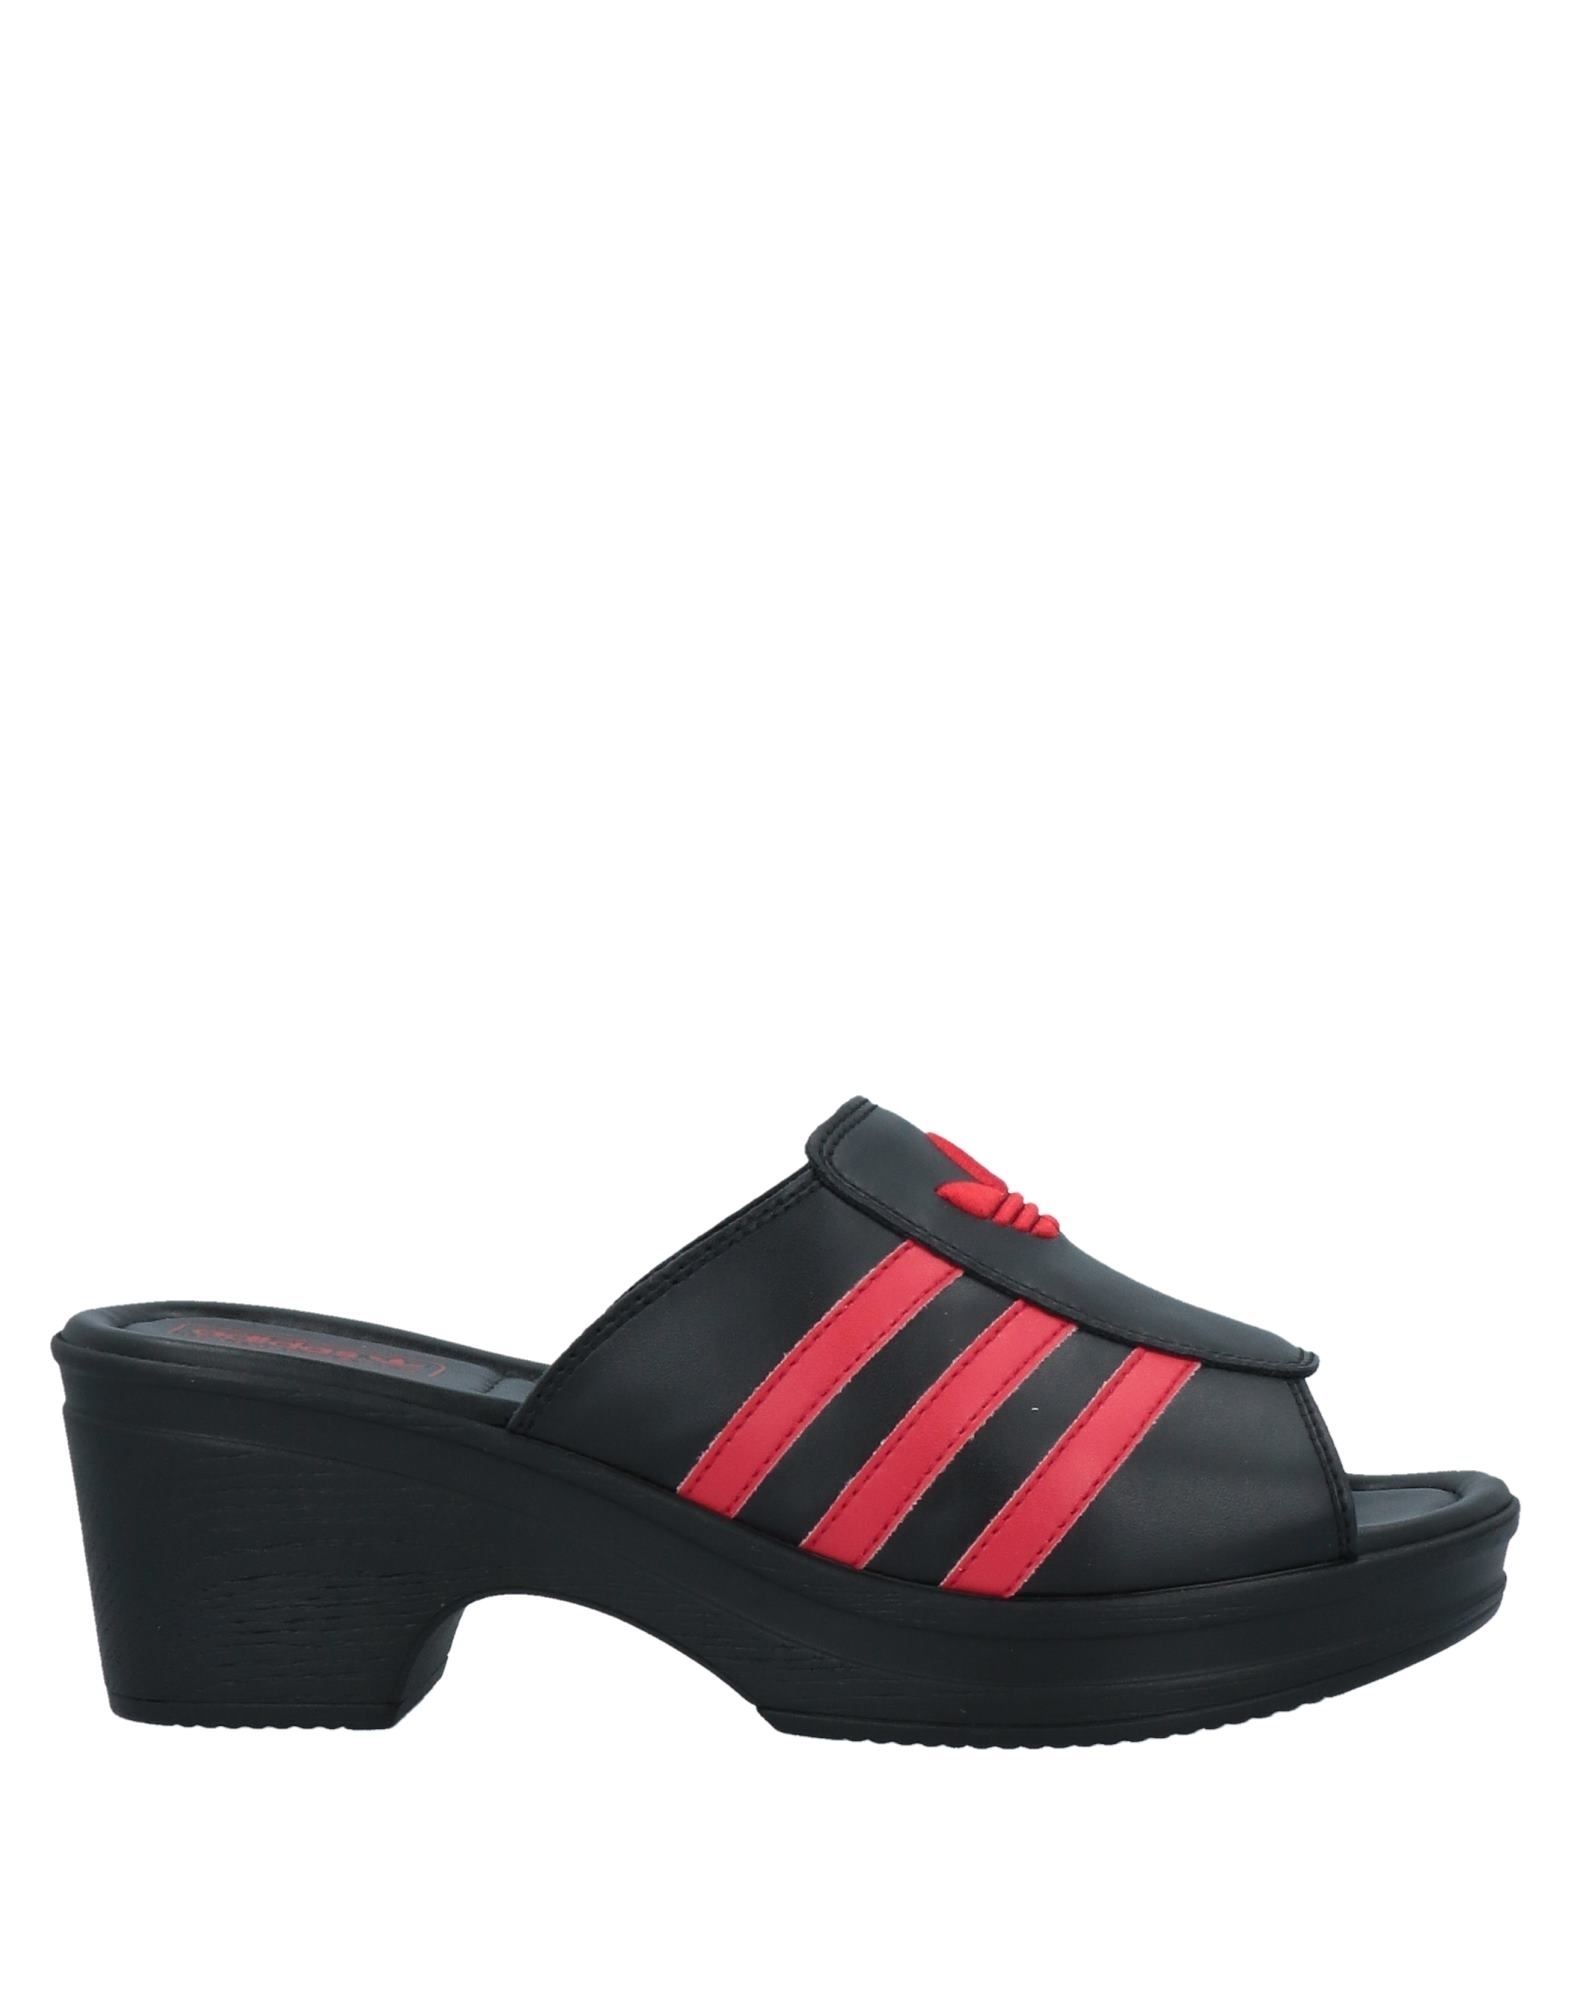 Adidas Originals X Lotta Volkova Sandals In Black